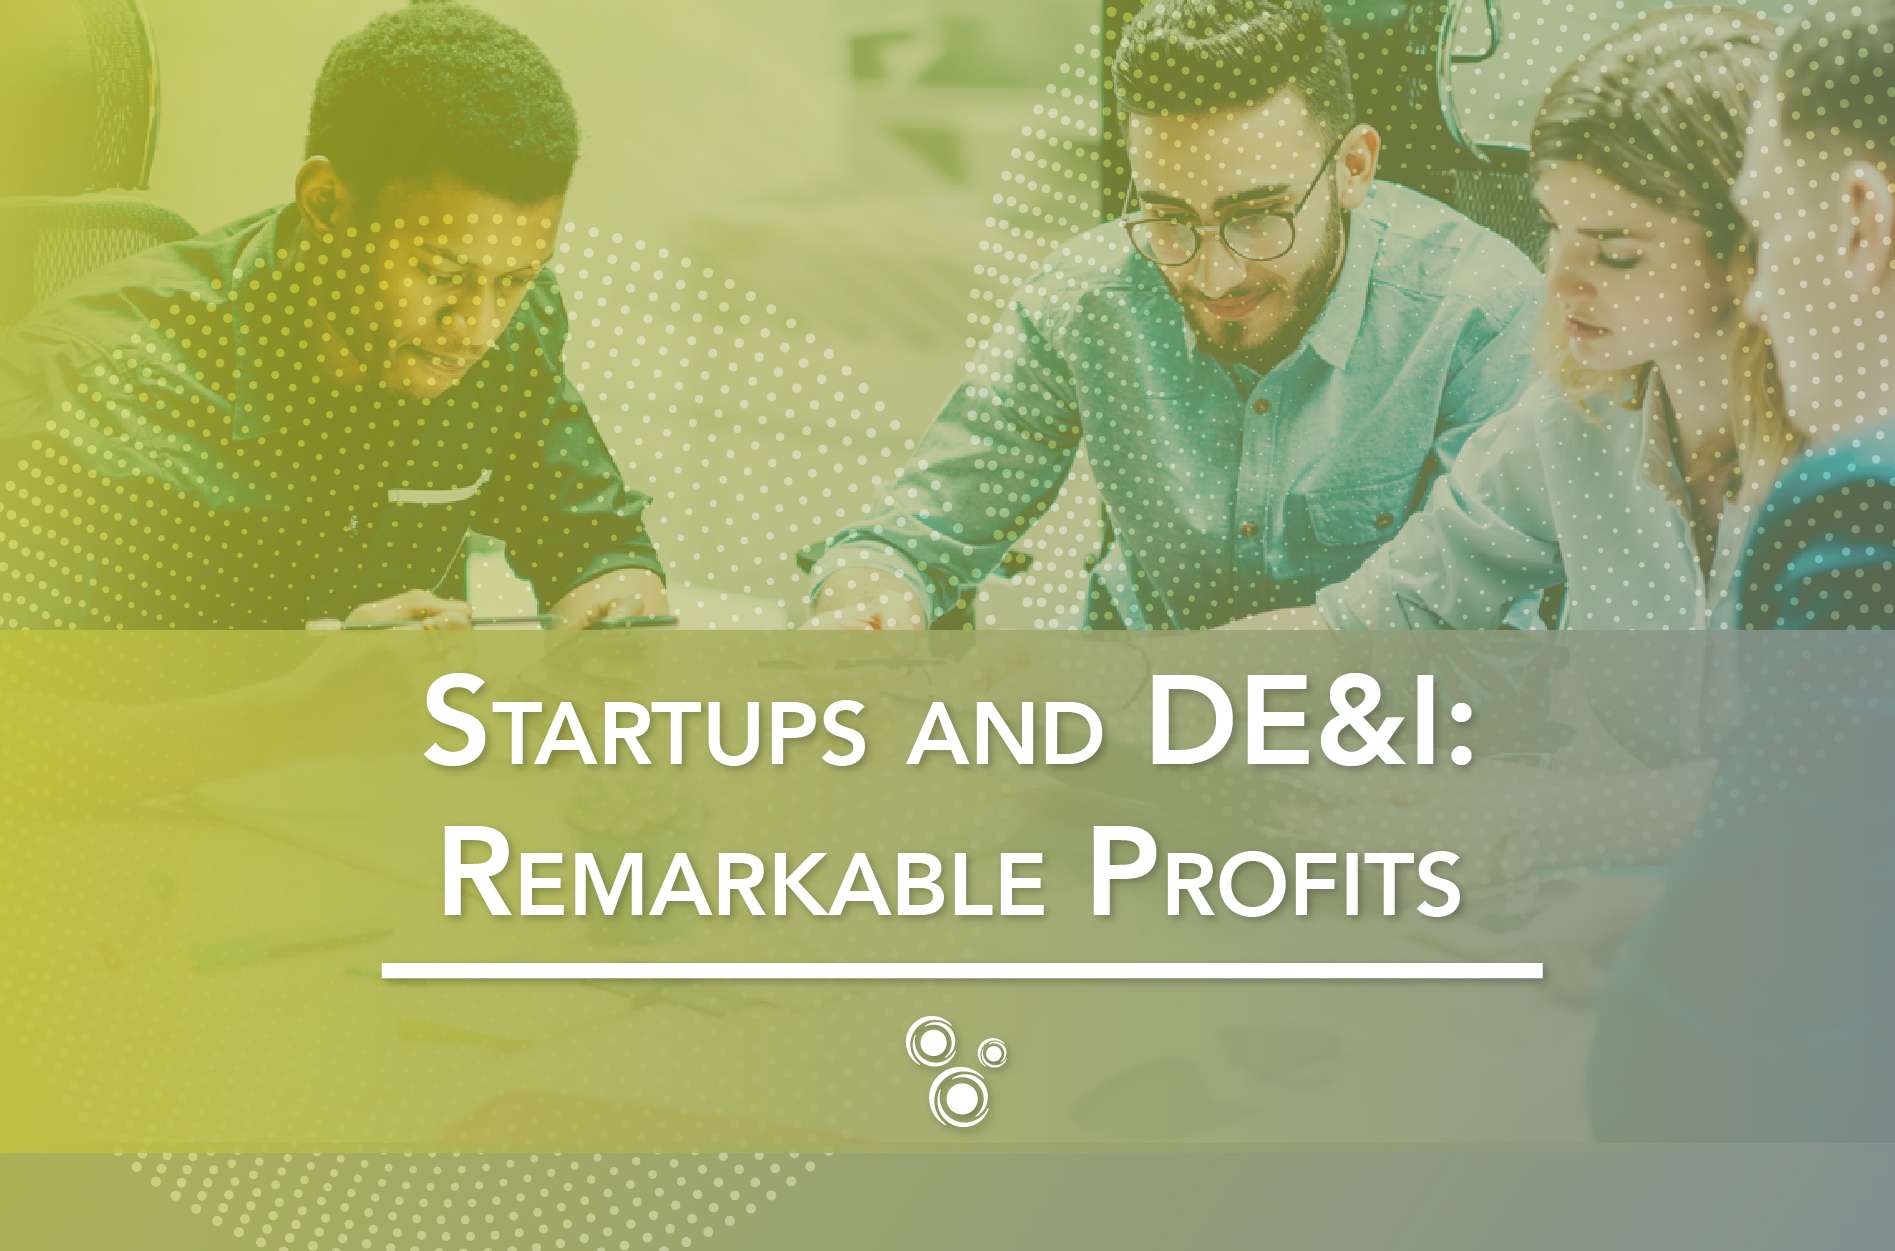 Startups and DE&I: Remarkable Profits